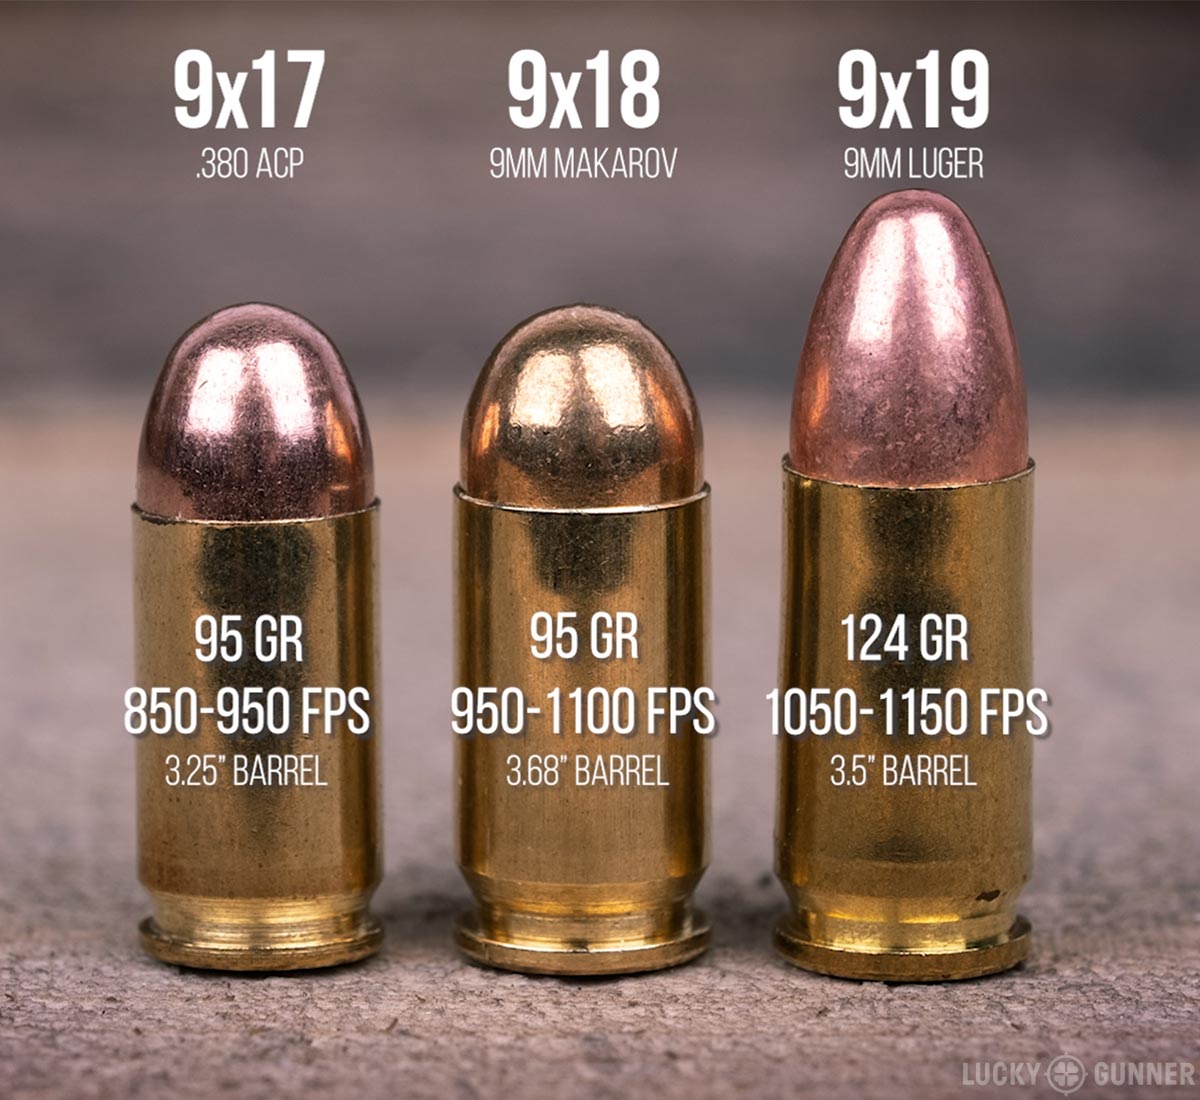 9x18 Mak versus .380 ACP versus 9mm Luger